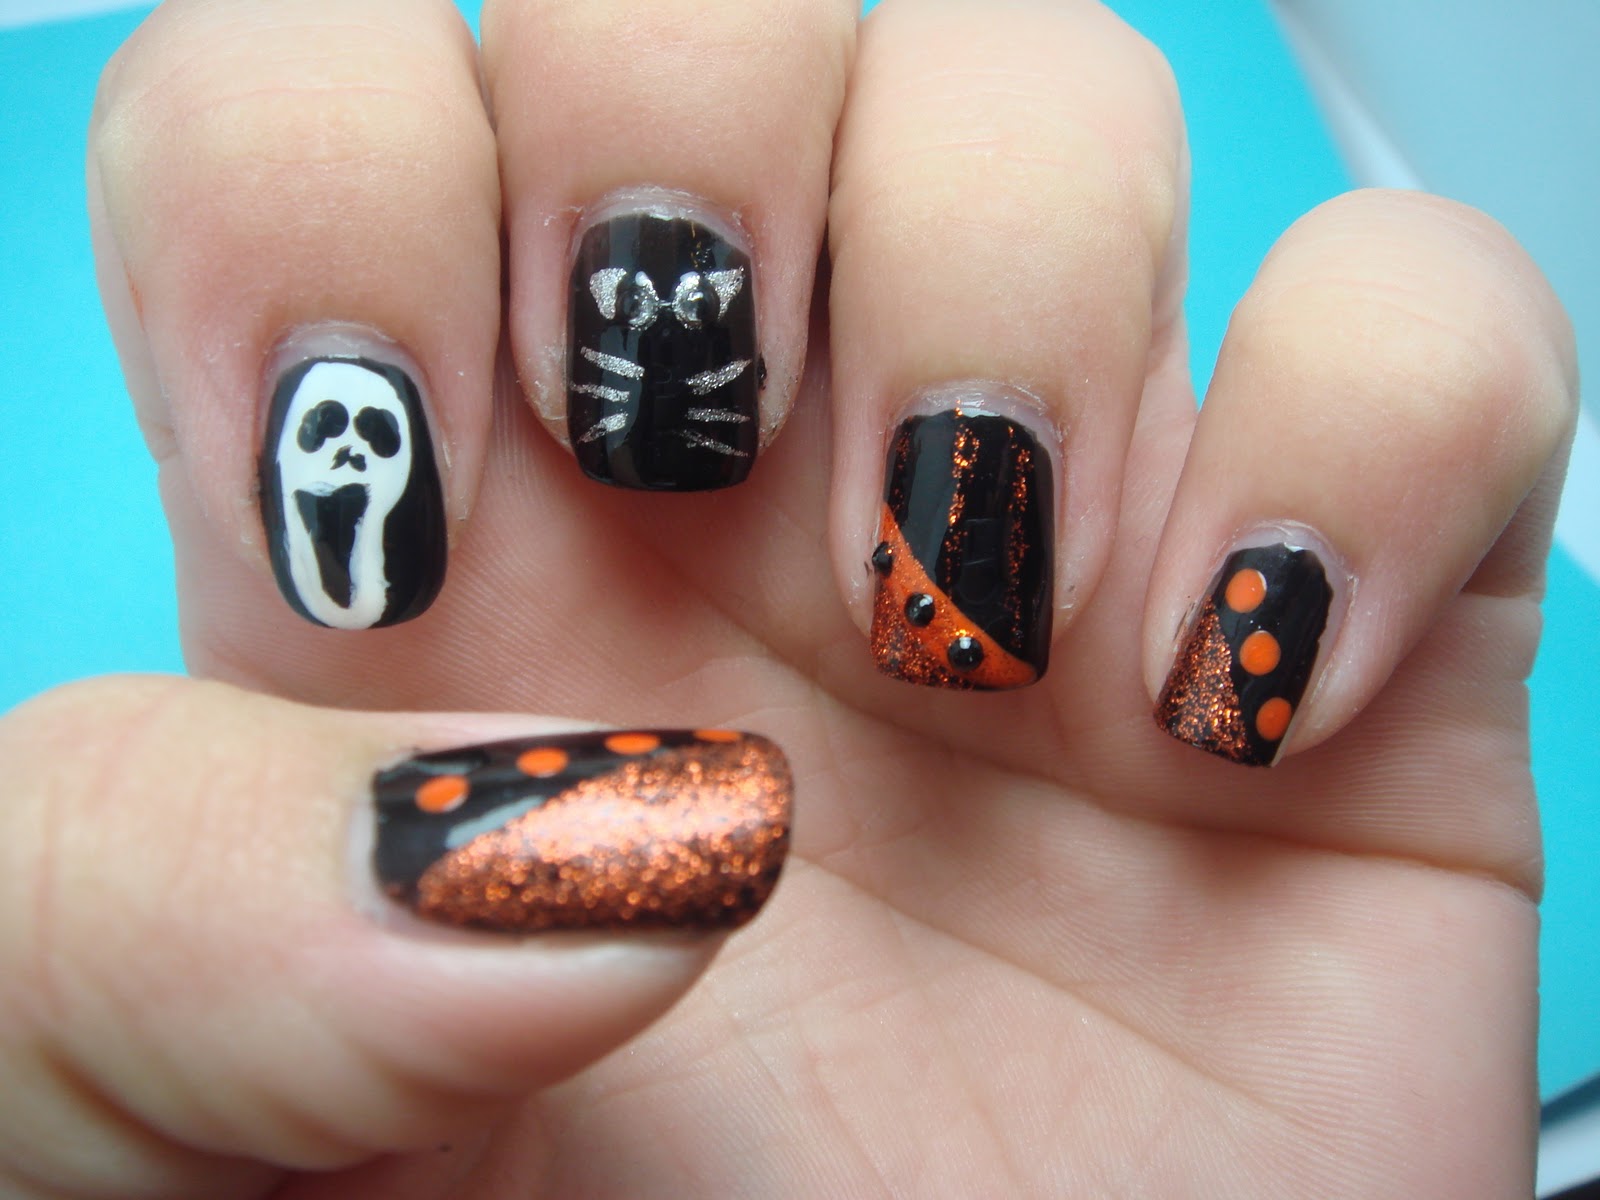 3. "Black and Orange Bat Nail Design for Halloween" - wide 4